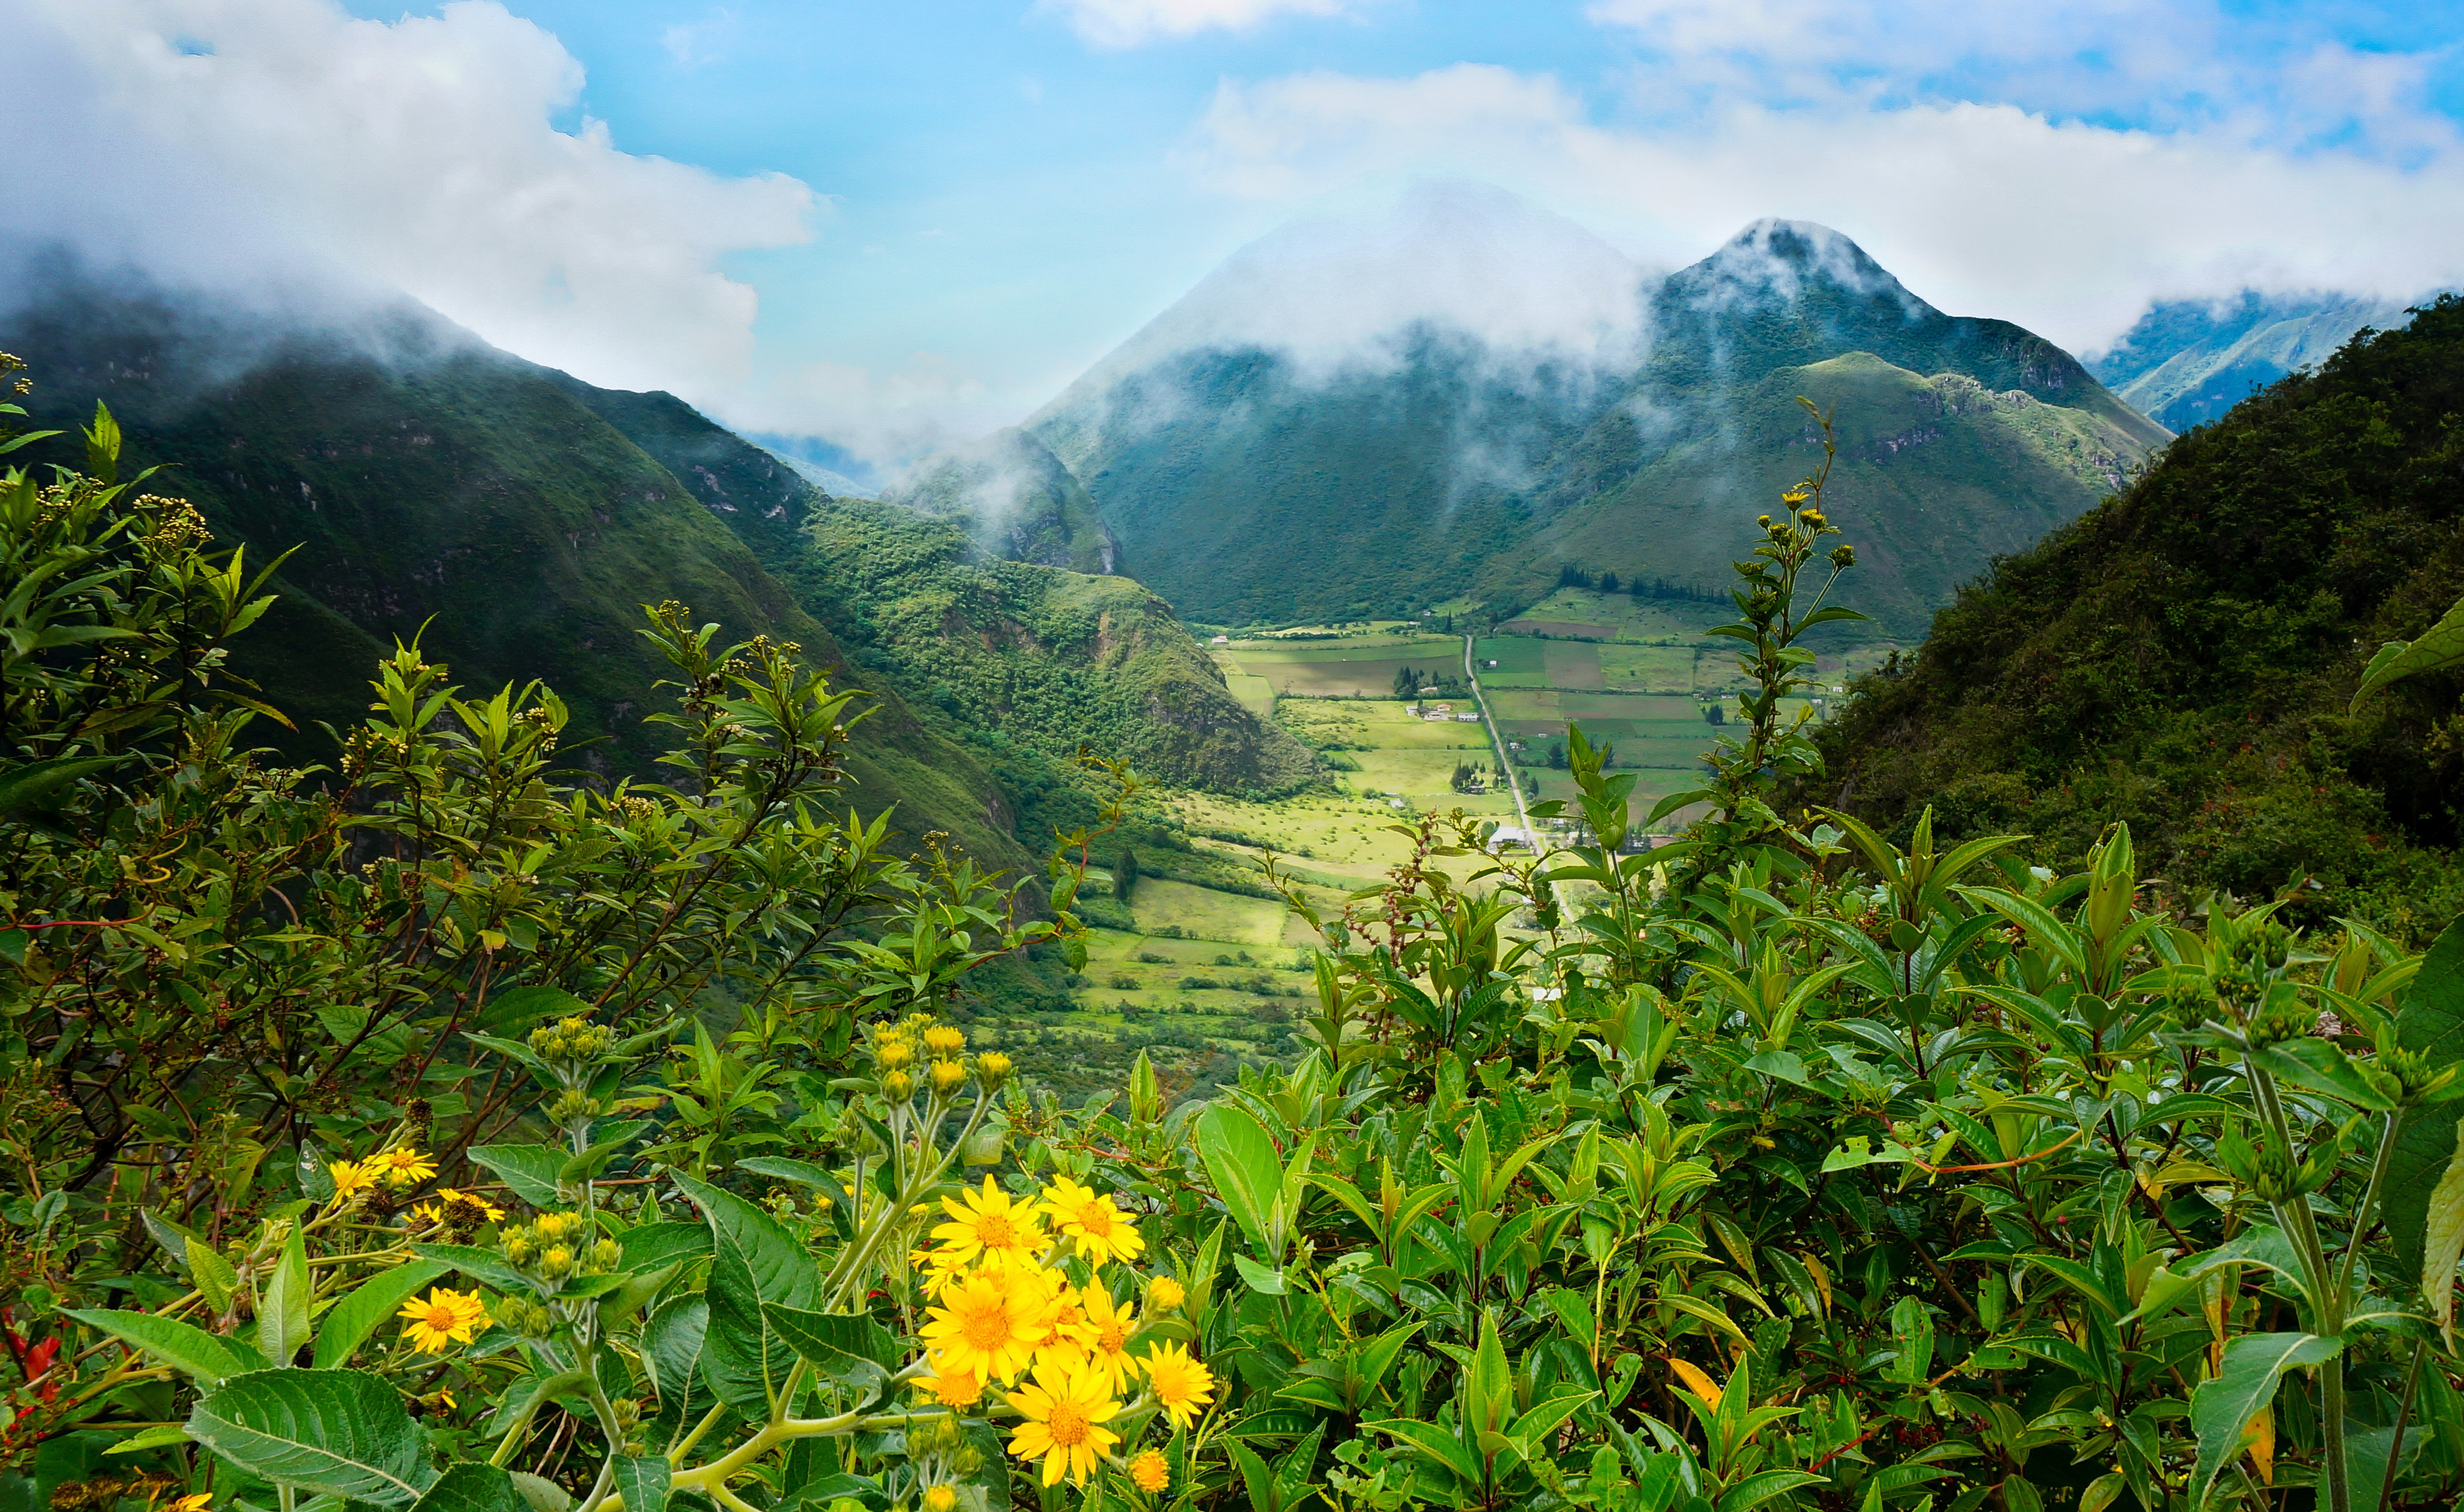 Mountains Of Ecuador 4k Ultra HD Wallpaper Background Image